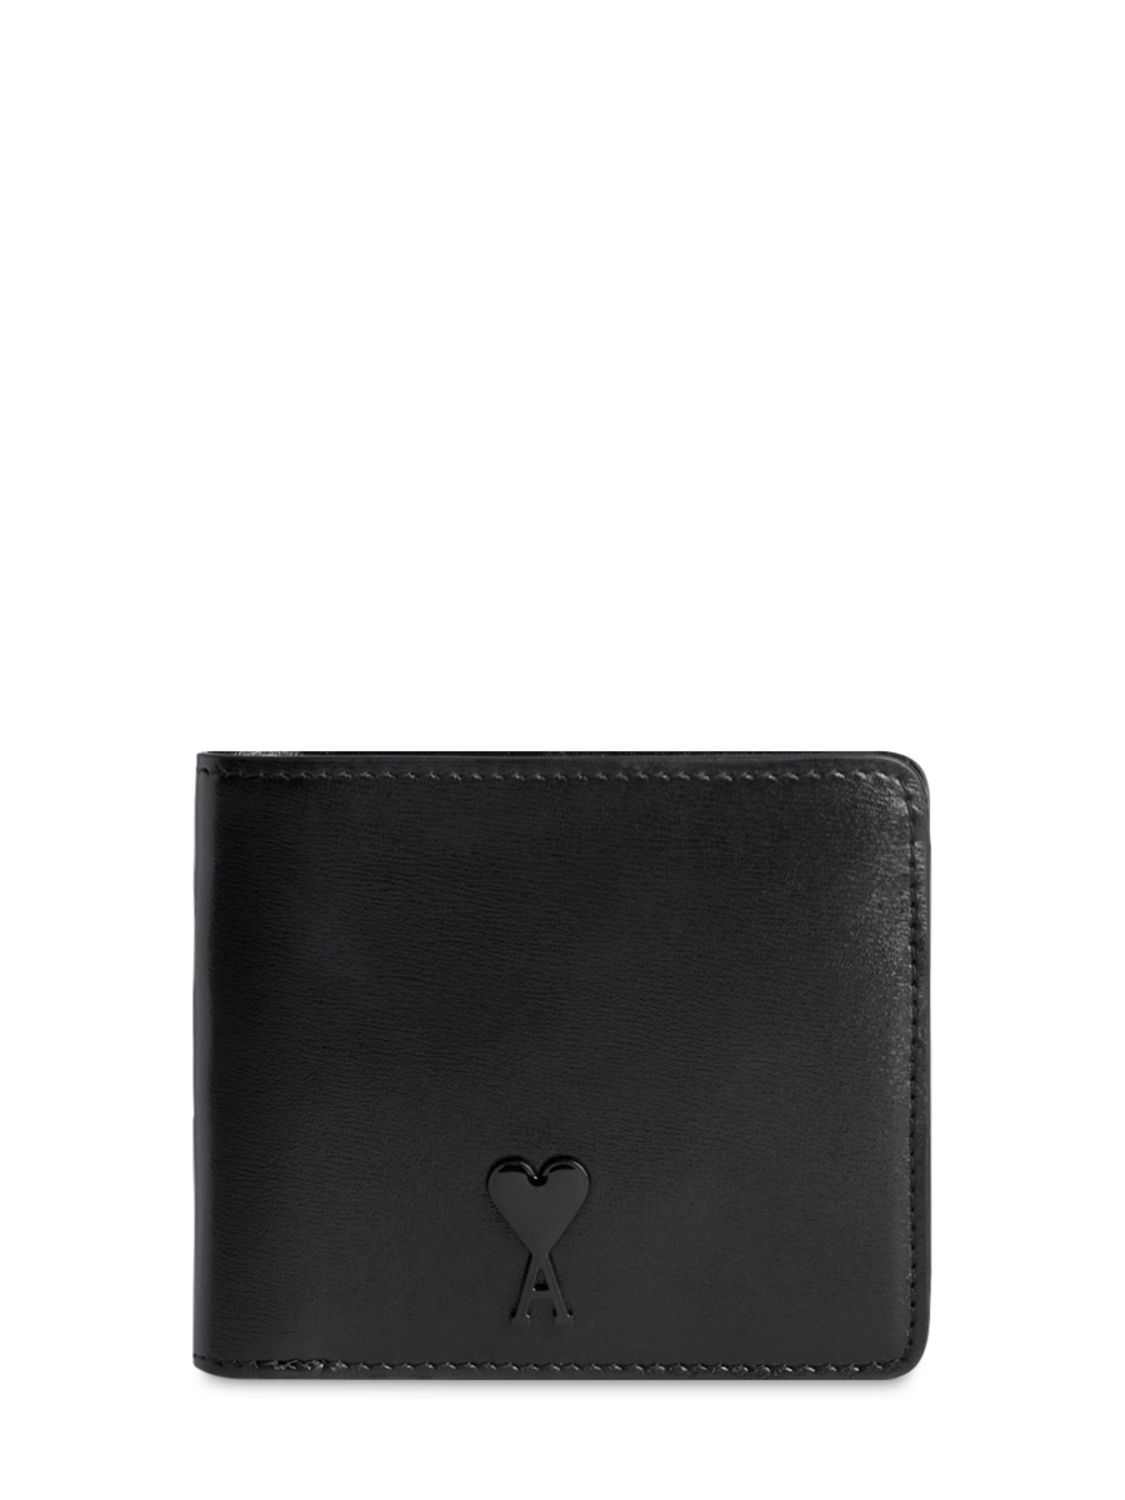 Palmellato Leather Billfold Wallet